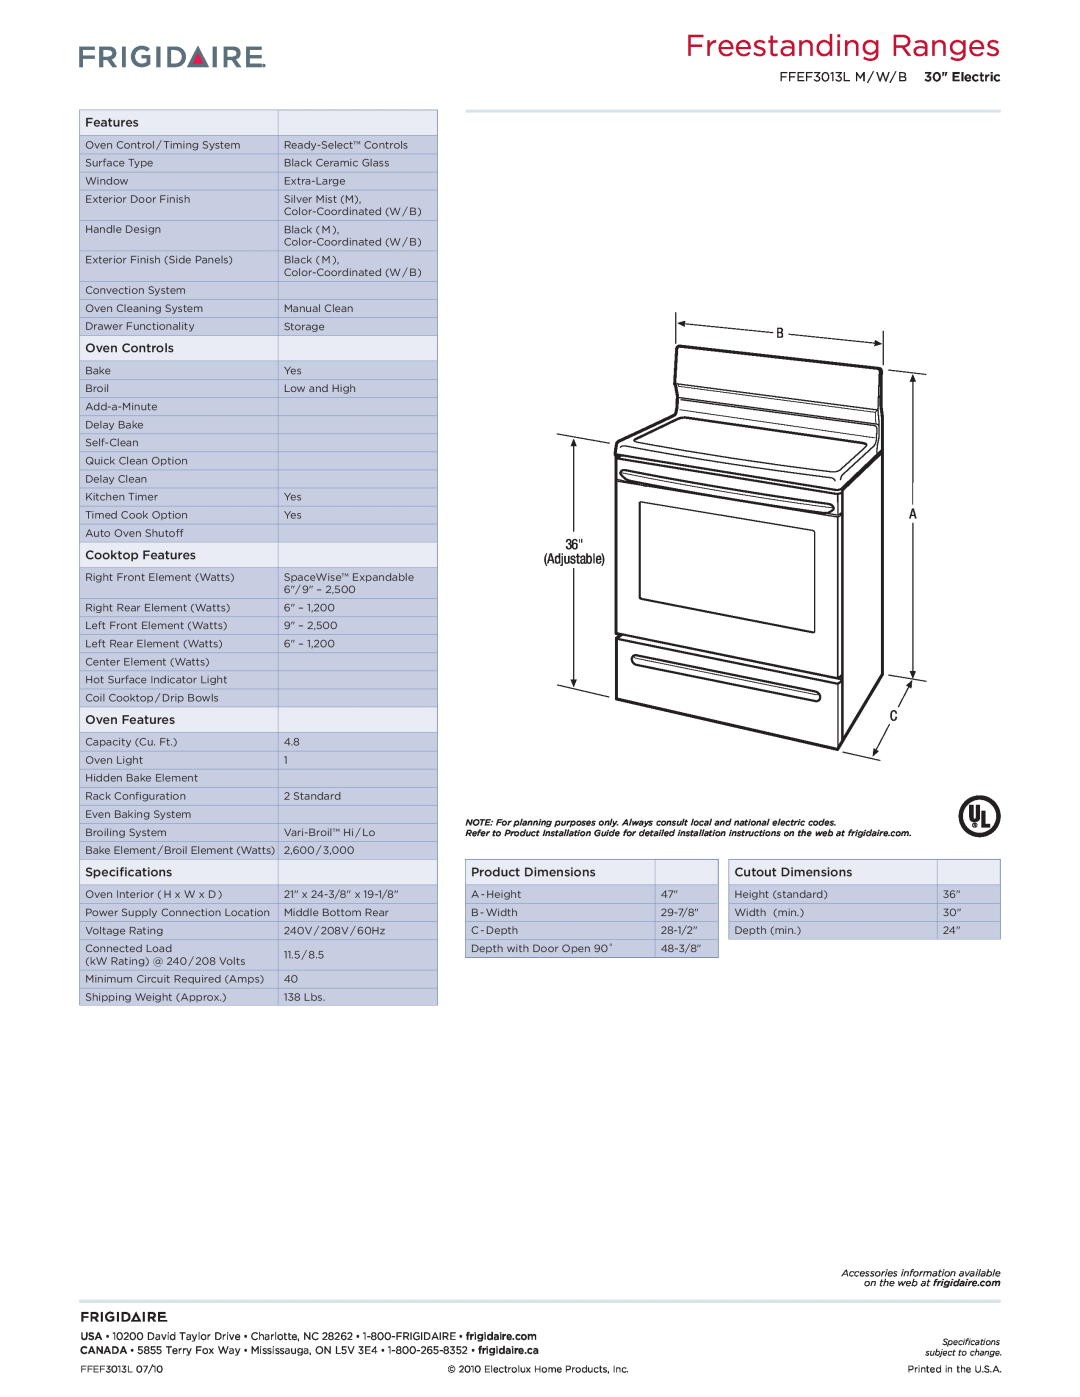 Frigidaire FPEC3085K dimensions Freestanding Ranges, FFEF3013L M / W/ B 30 Electric, Oven Controls, Cooktop Features 